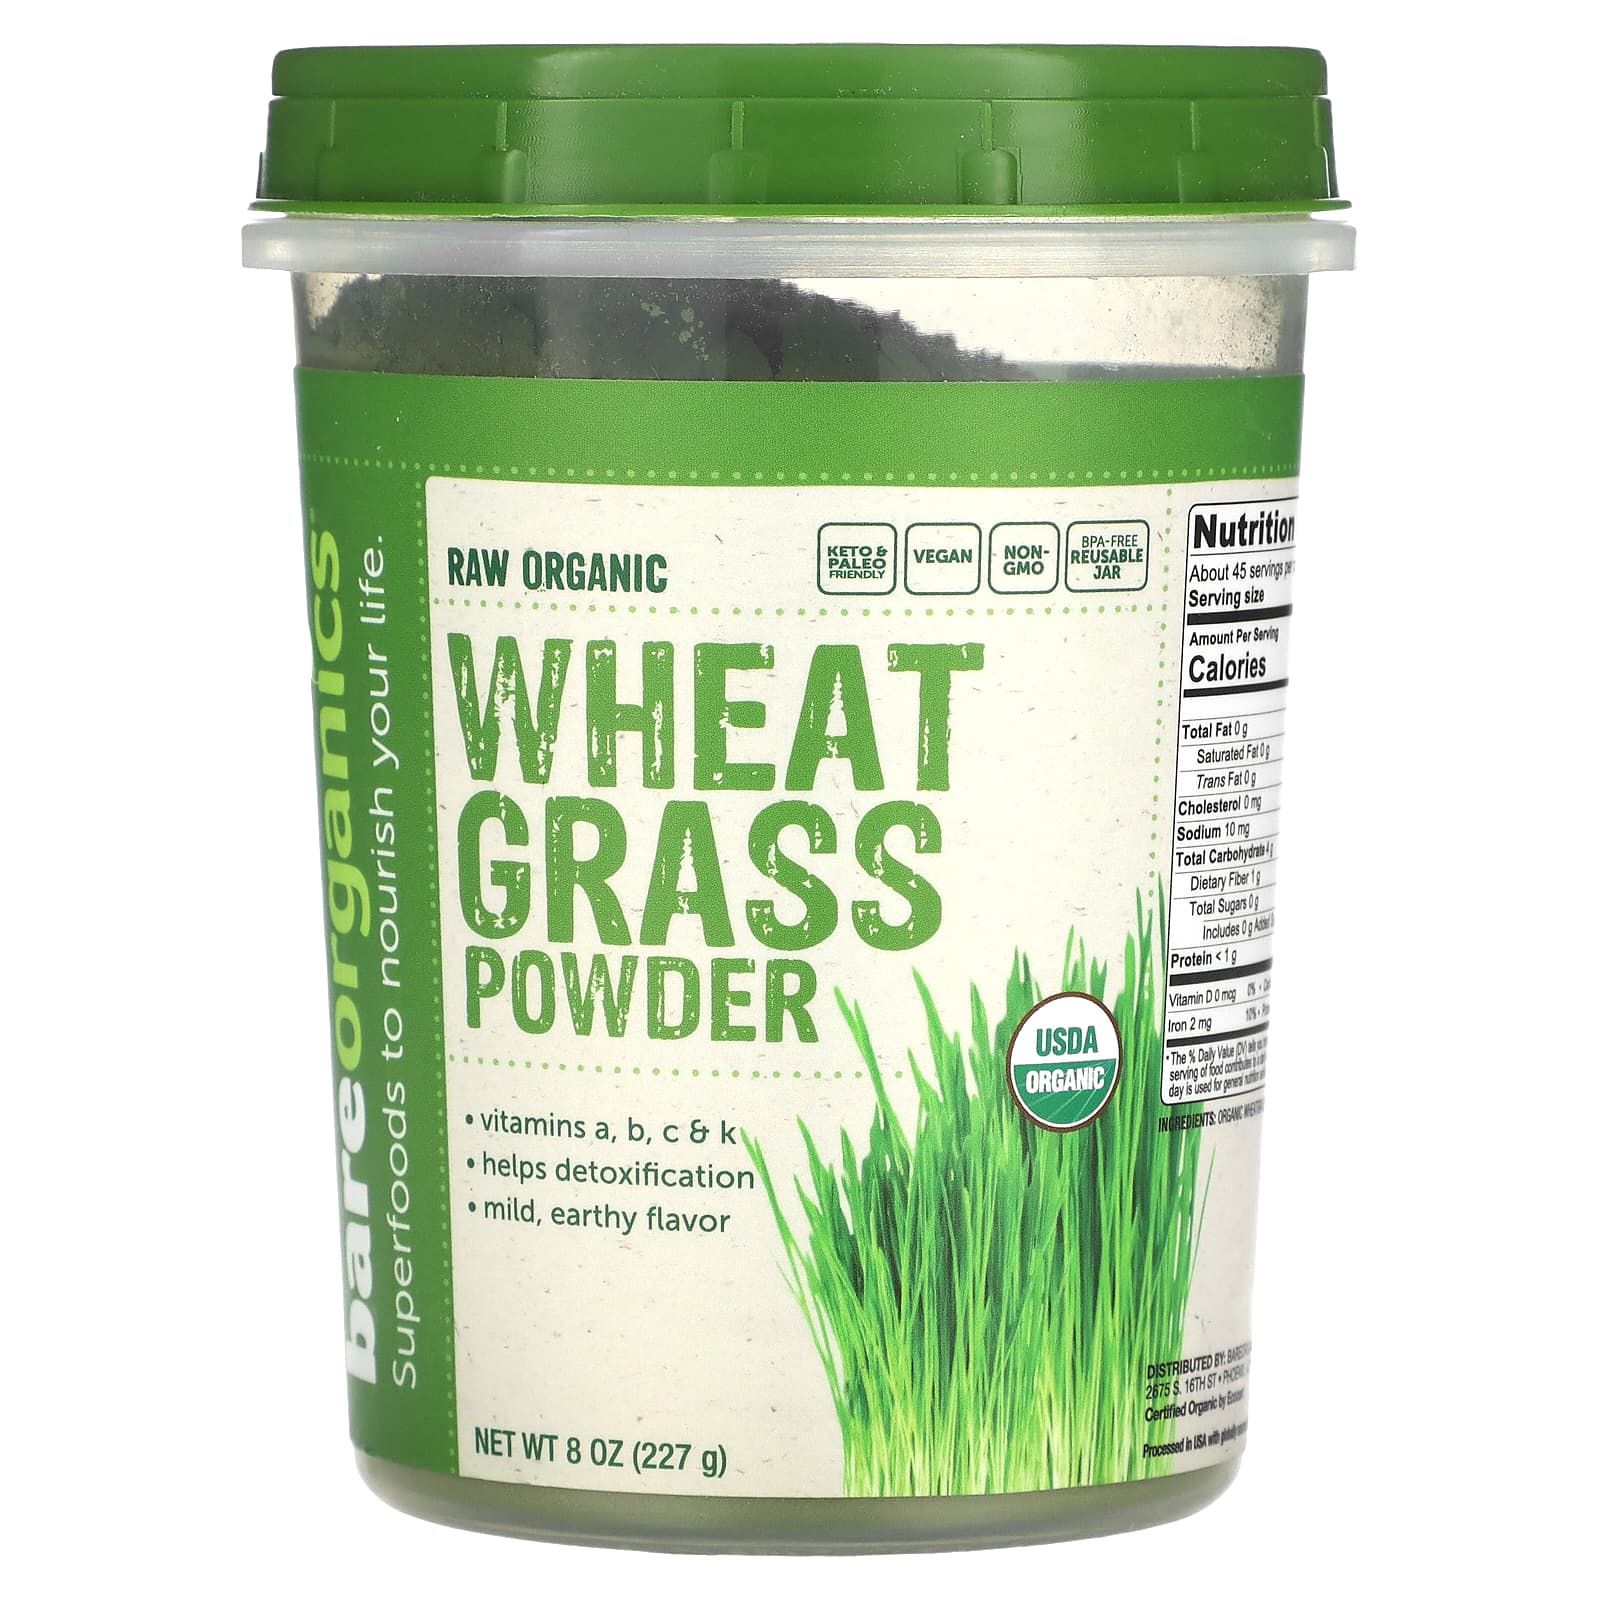 Pure Synergy Organics Barley Grass Juice Powder, 5.3 oz - Pay Less Super  Markets